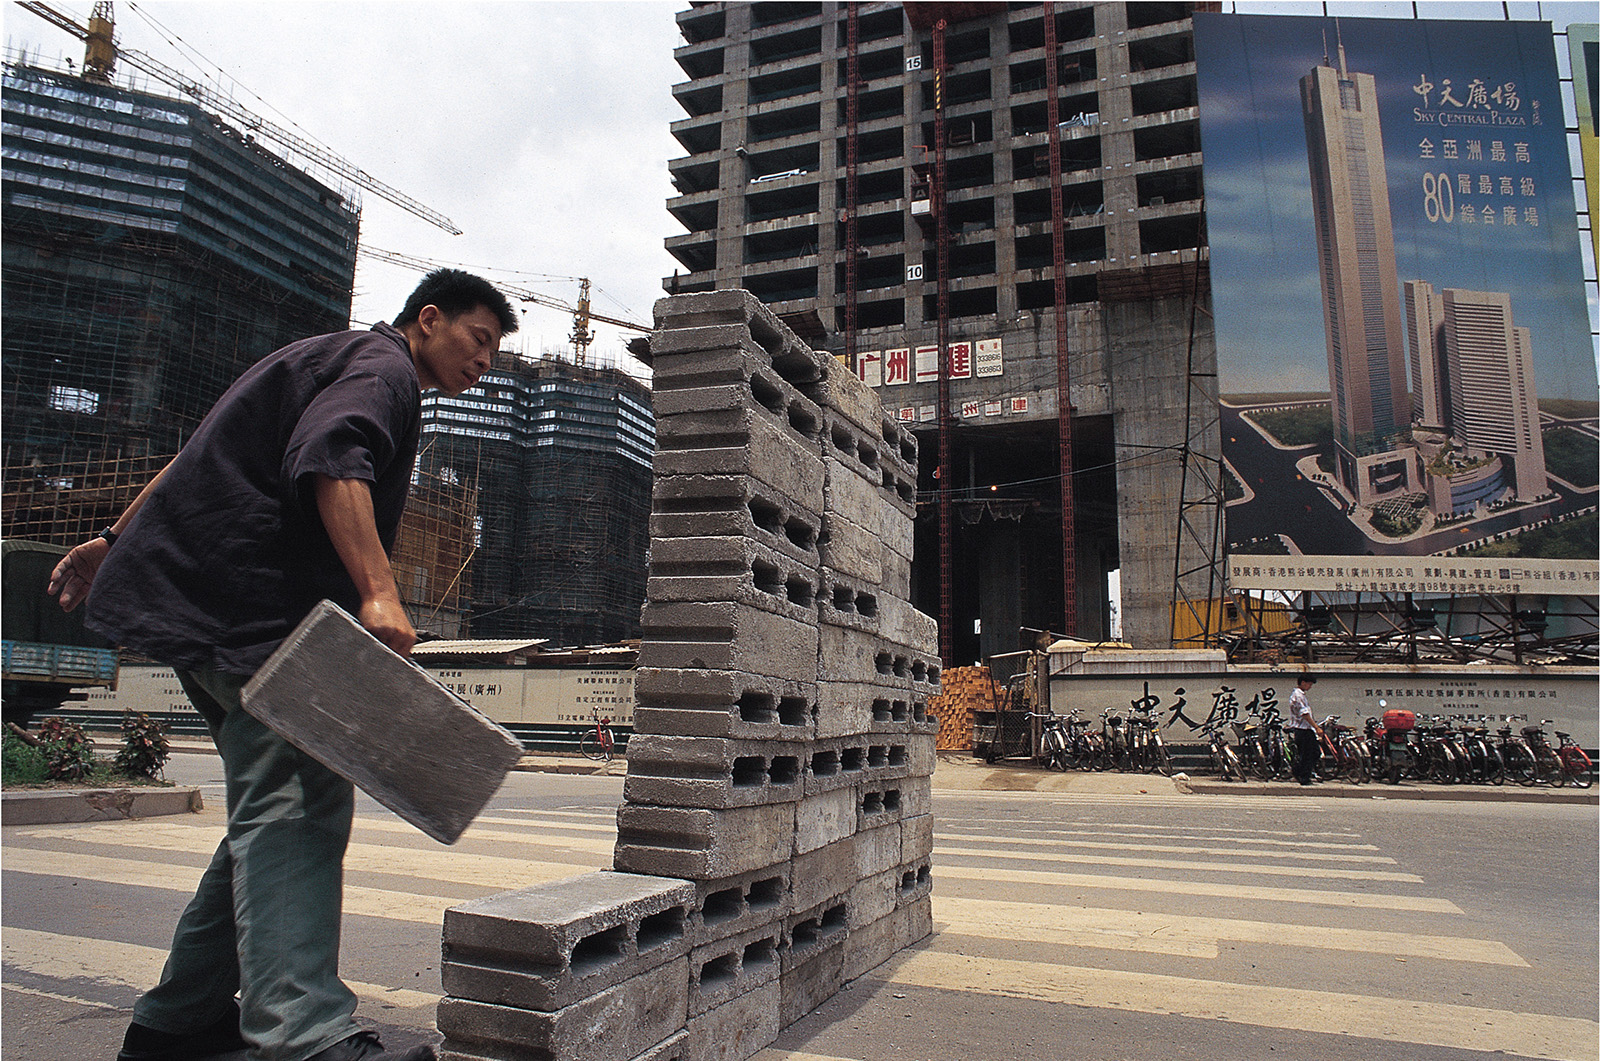 A man stacks concrete blocks on a city road